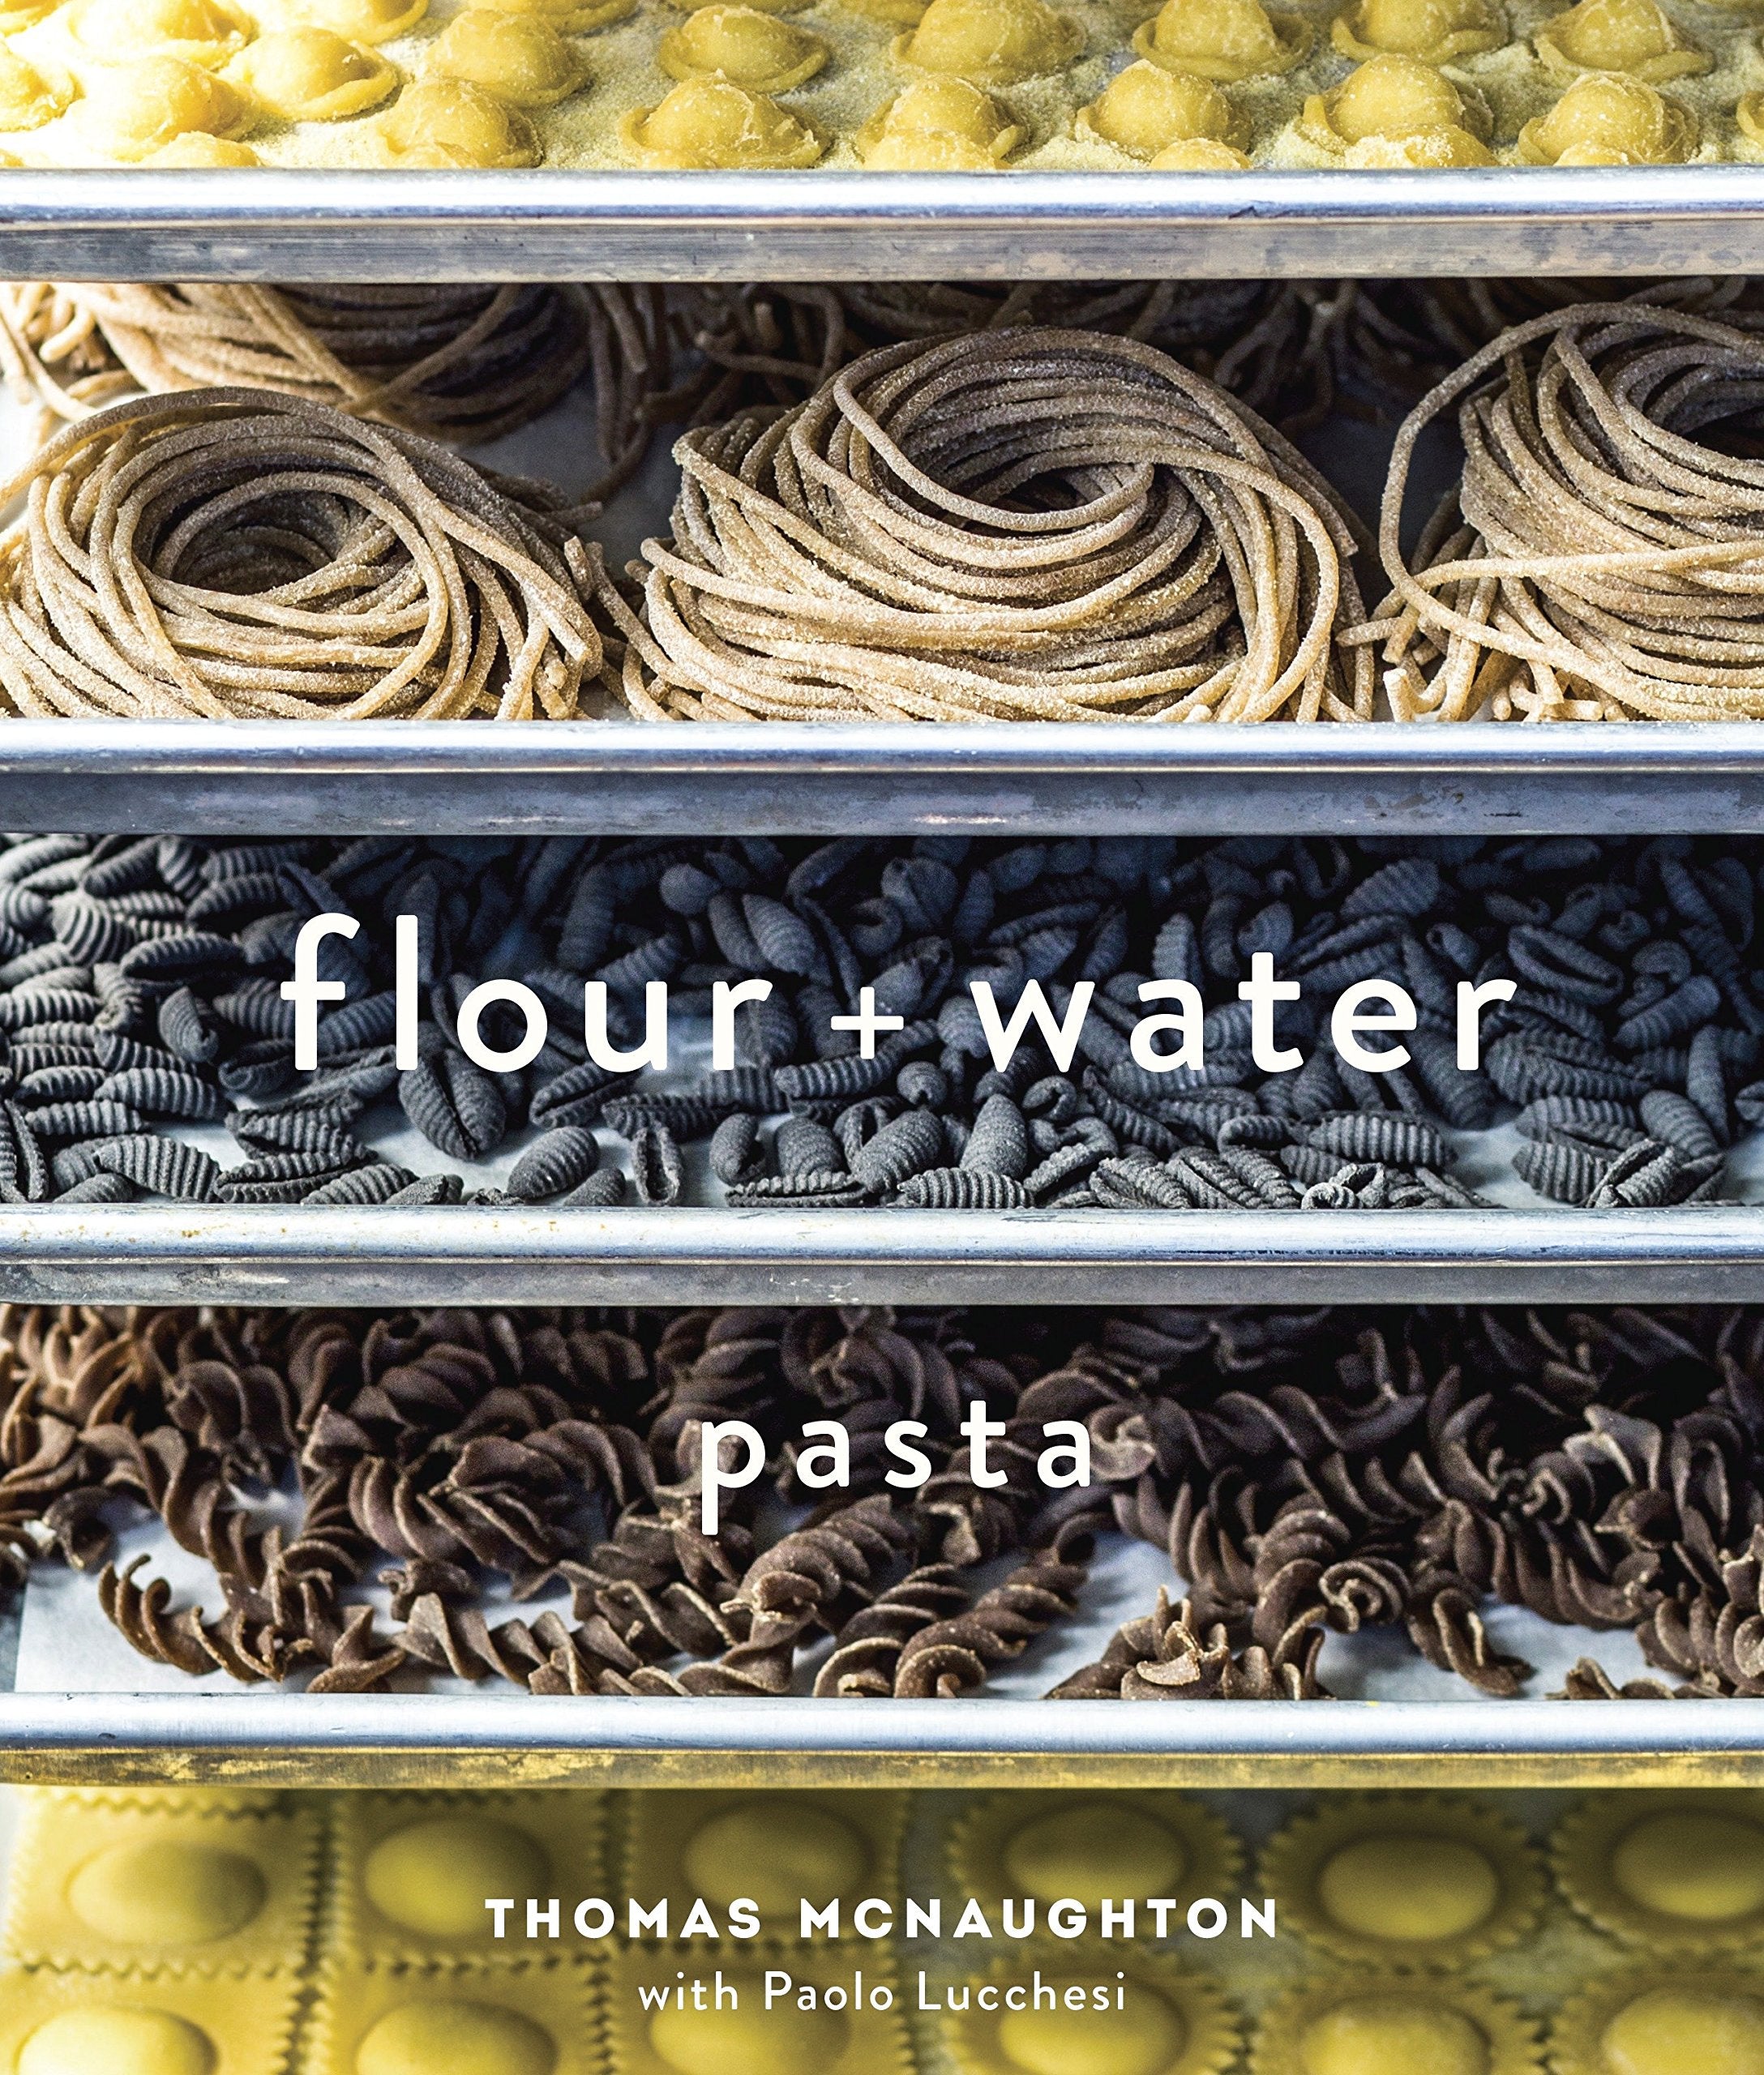 Flour + Water: Pasta (Thomas McNaughton) *Signed*